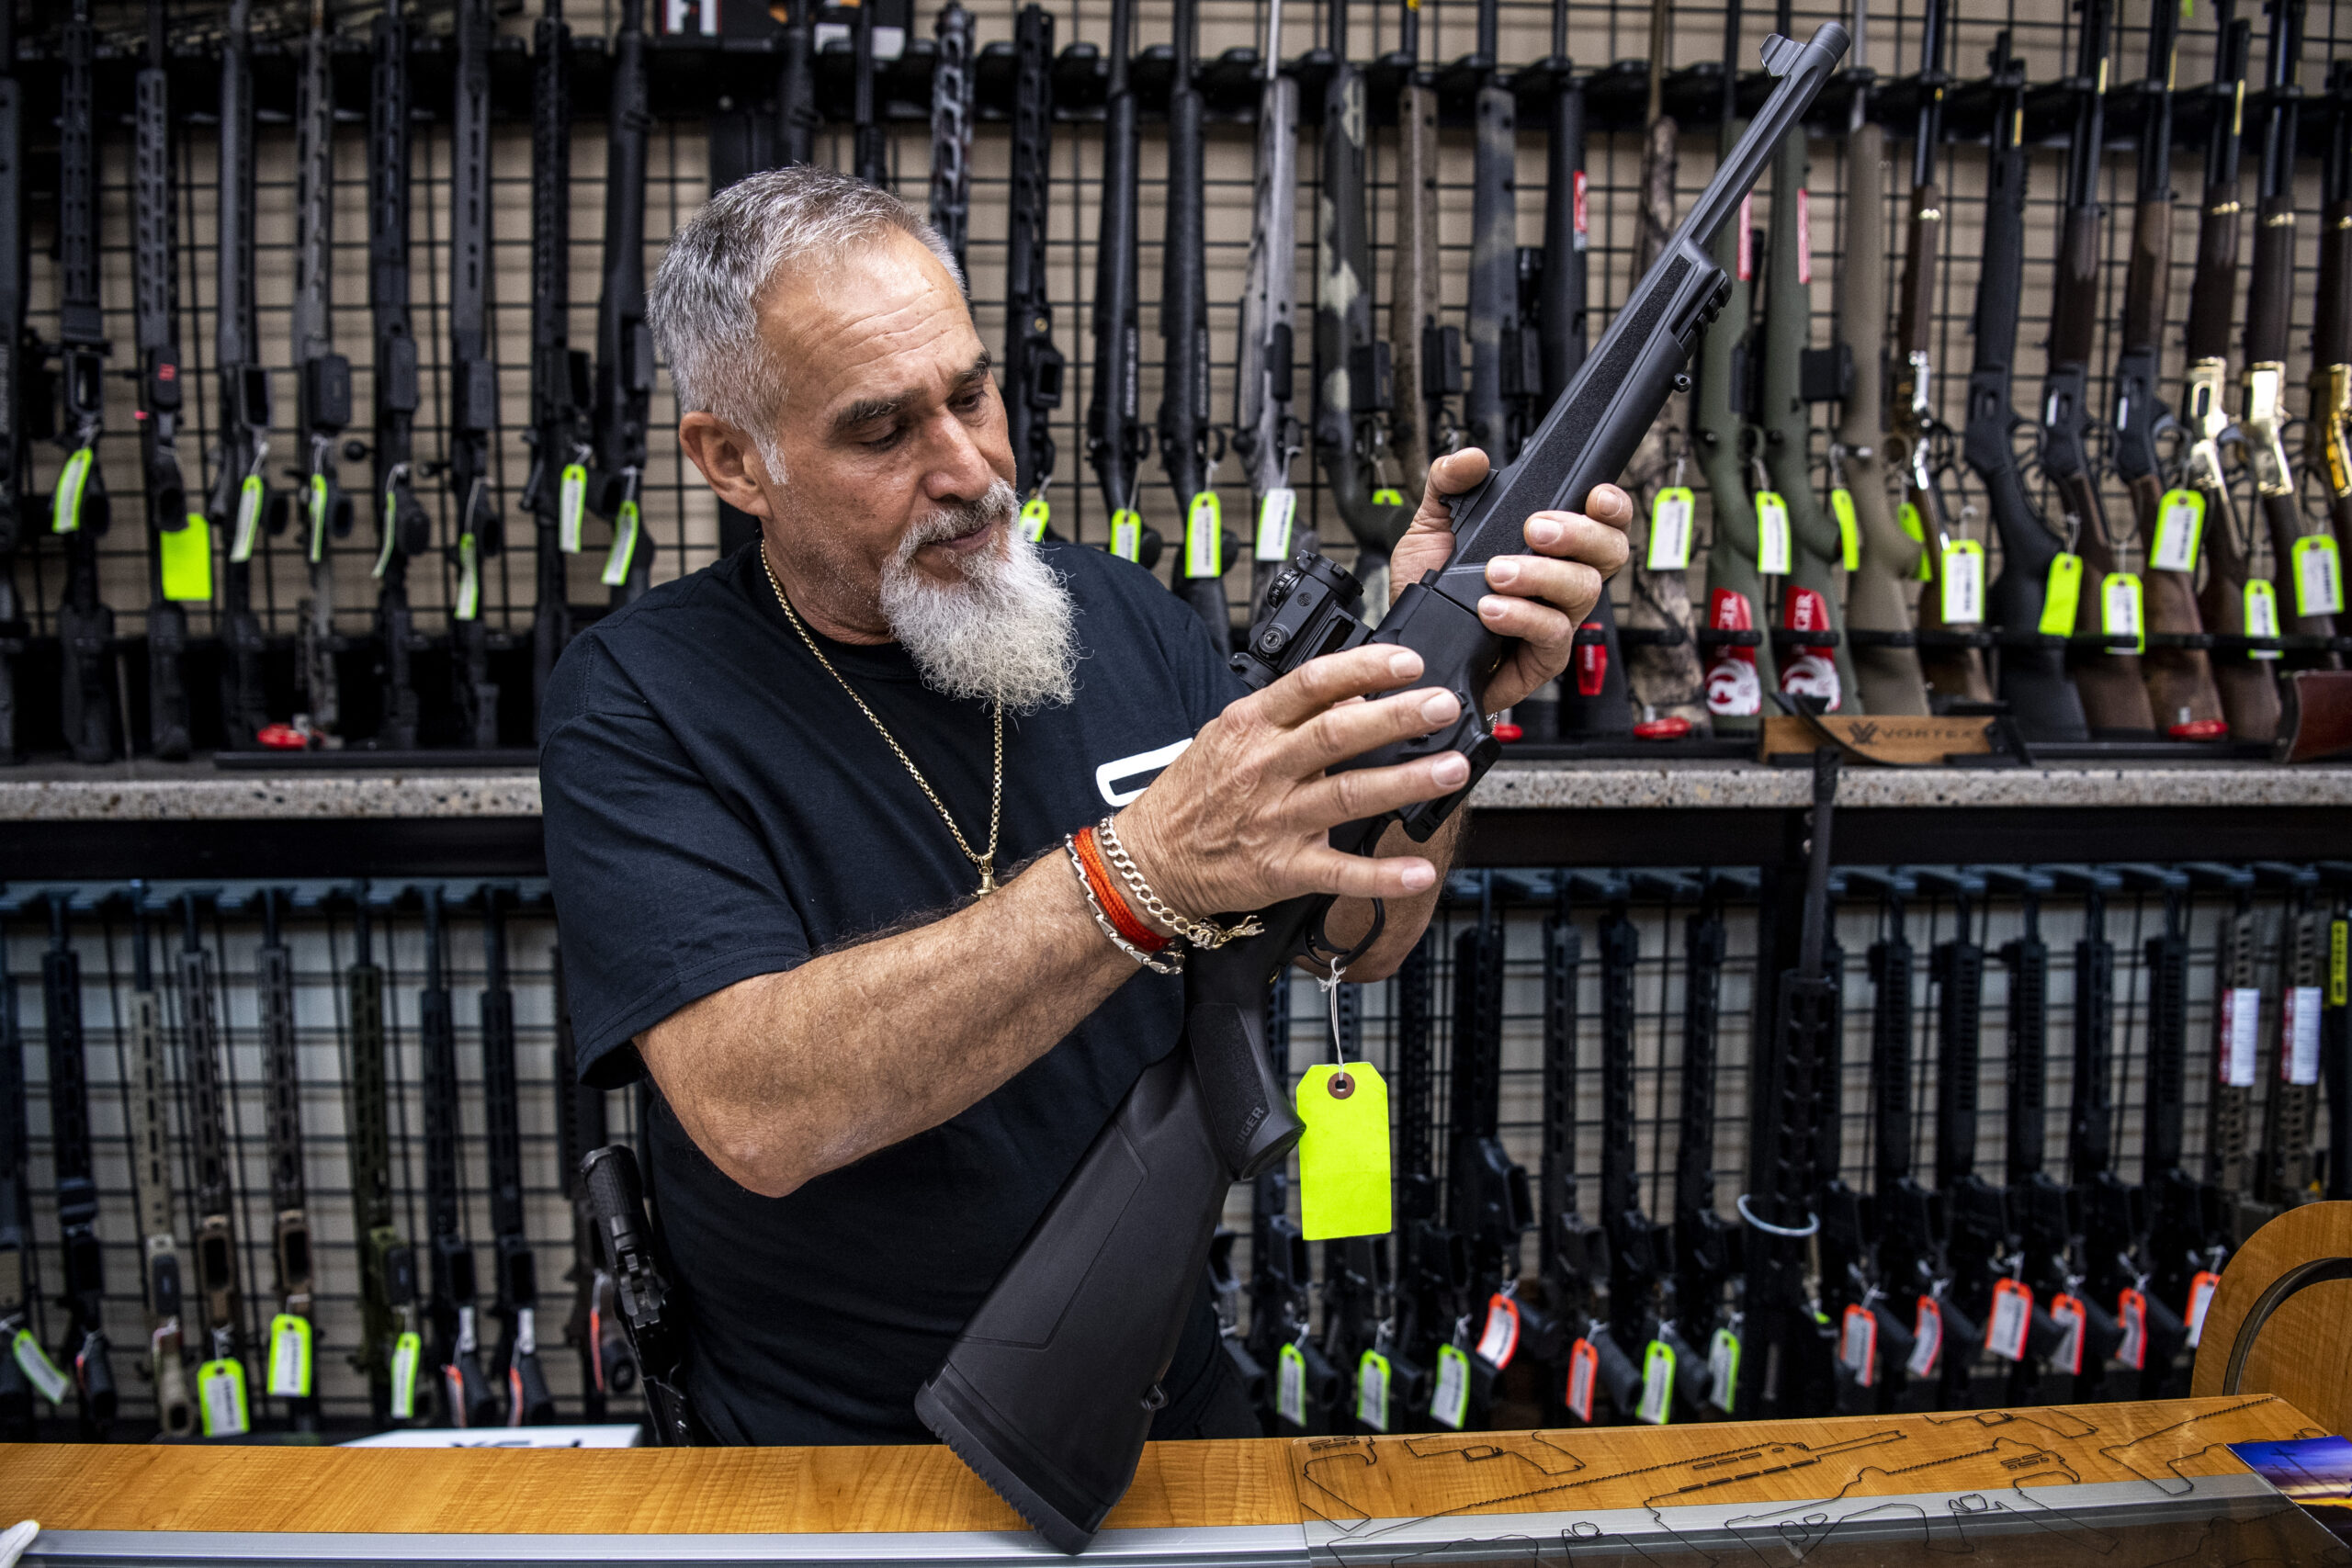 Salesman John Licata demonstrates a competition shooting gun at SP firearms on Thursday, June 23, 2022, in Hempstead, New York. (AP Photo/Brittainy Newman)